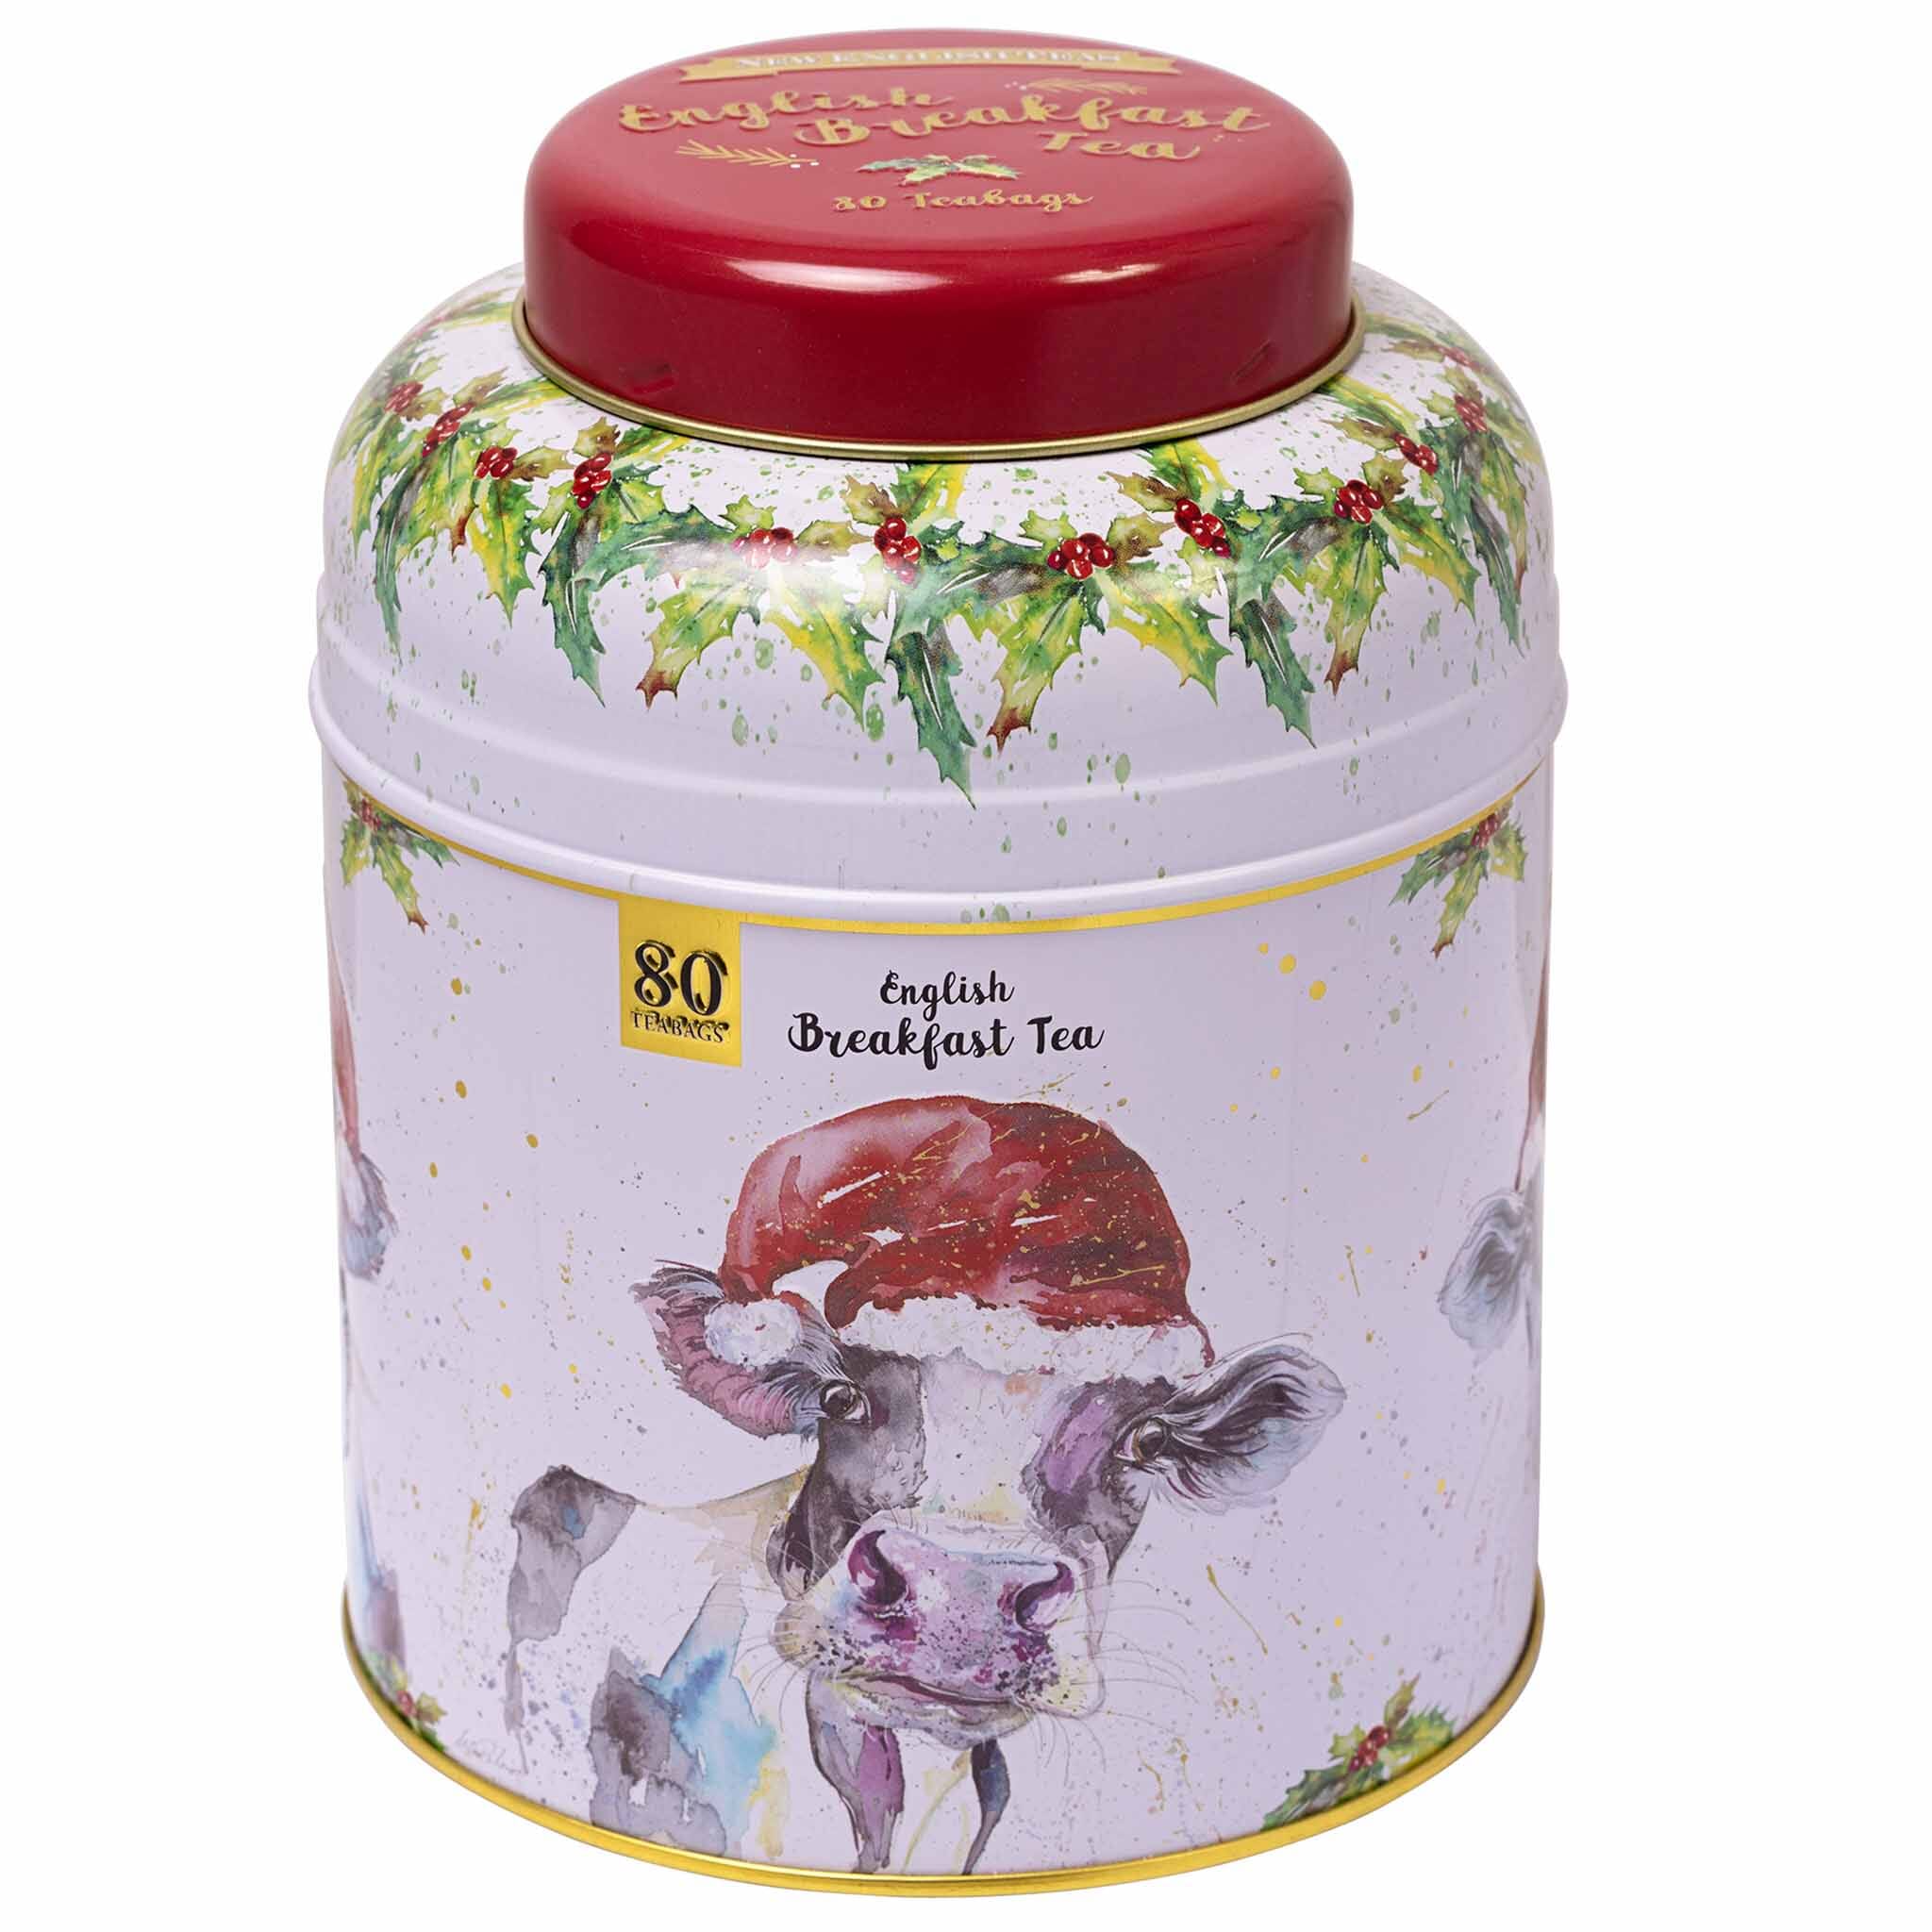 Festive Cow Tea Caddy by Nicola Rowles Tea Tins New English Teas 